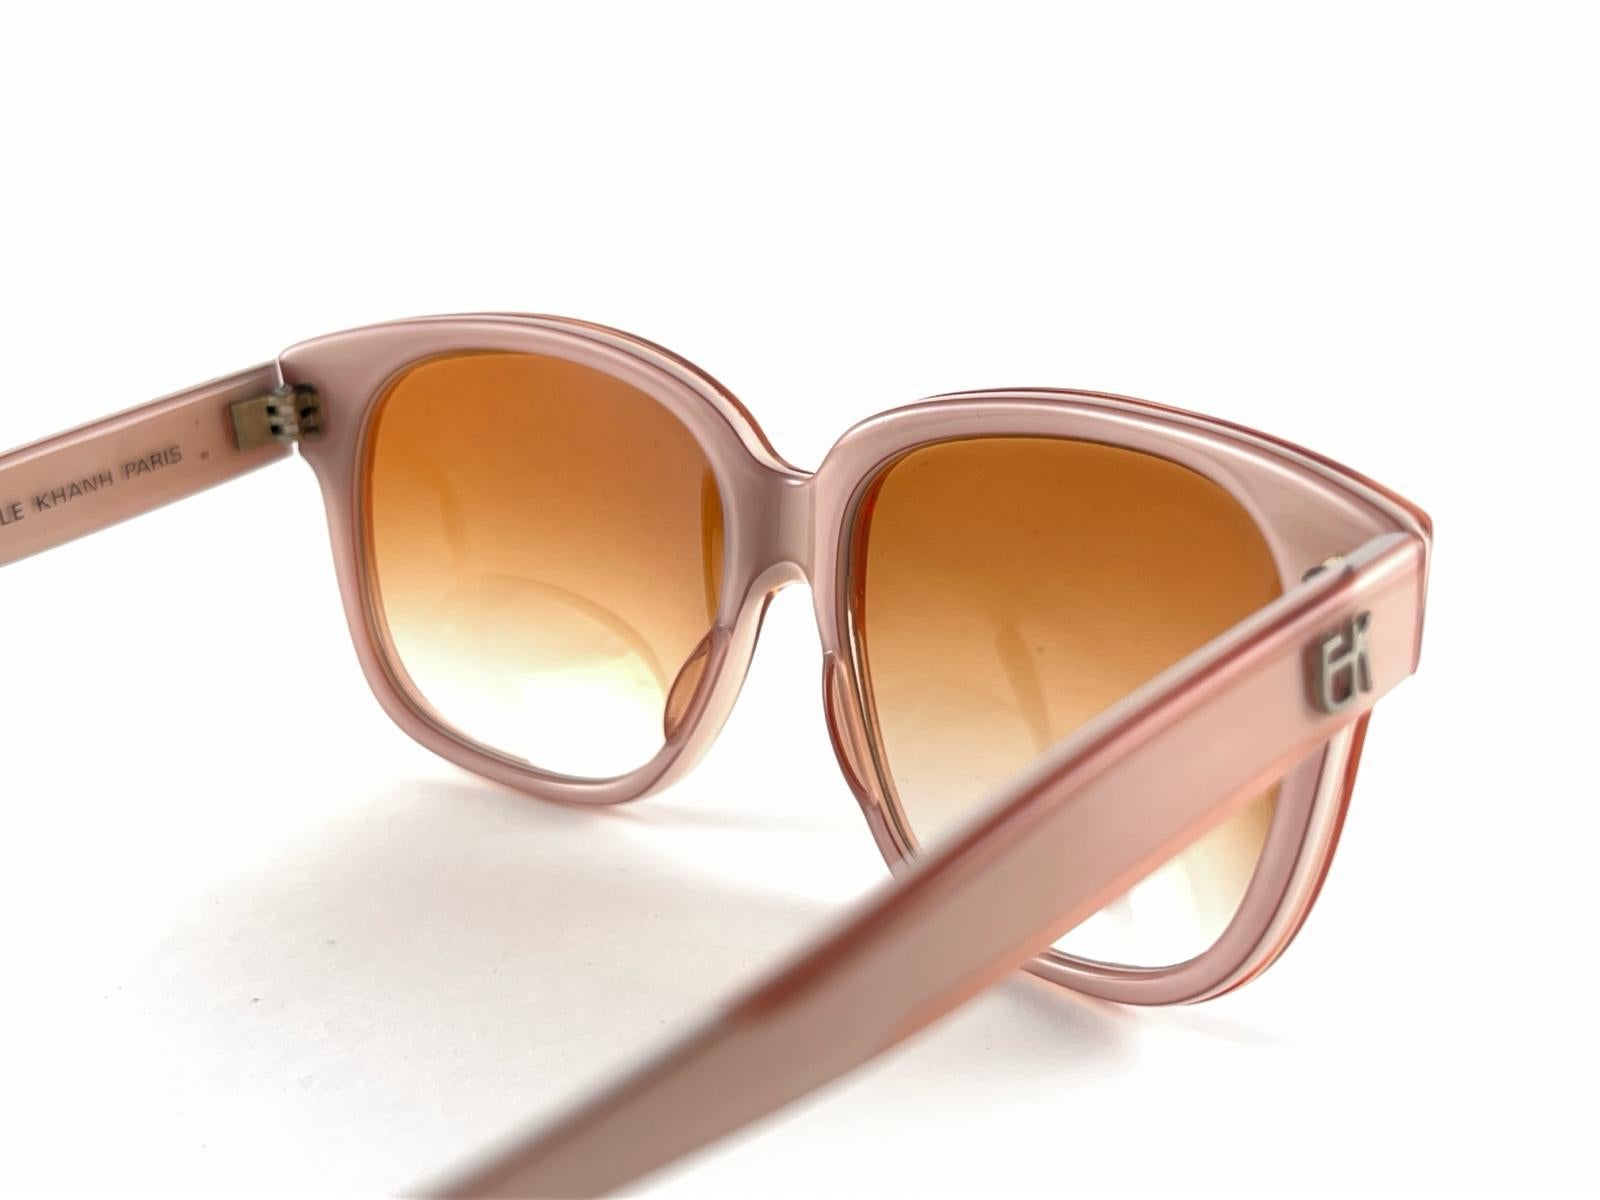 Neu Vintage Emmanuelle Khanh 8080 62 Rosa übergroße französische Vintage-Sonnenbrille in Übergröße 70er Jahre im Angebot 5